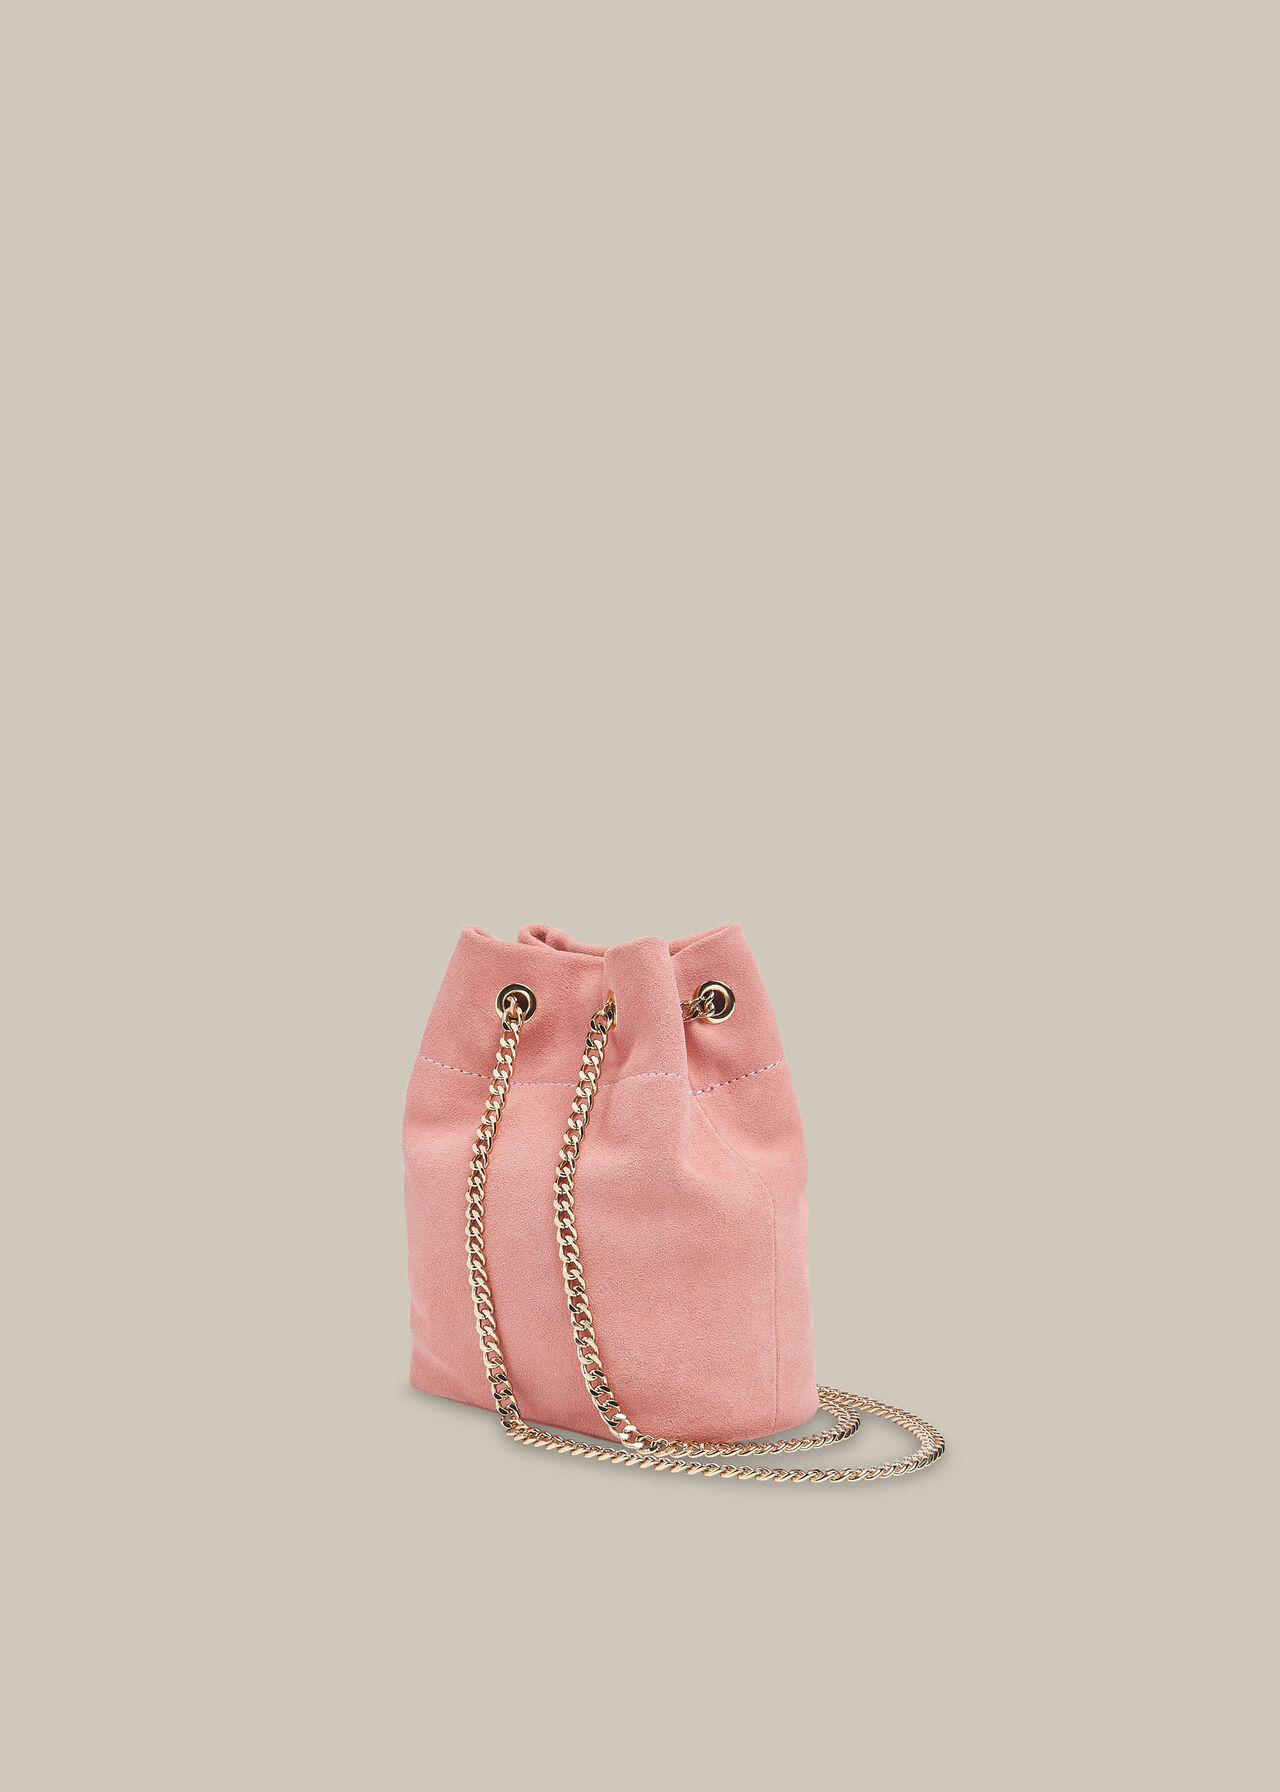 Pink Ivy Chain Drawstring Bag | WHISTLES